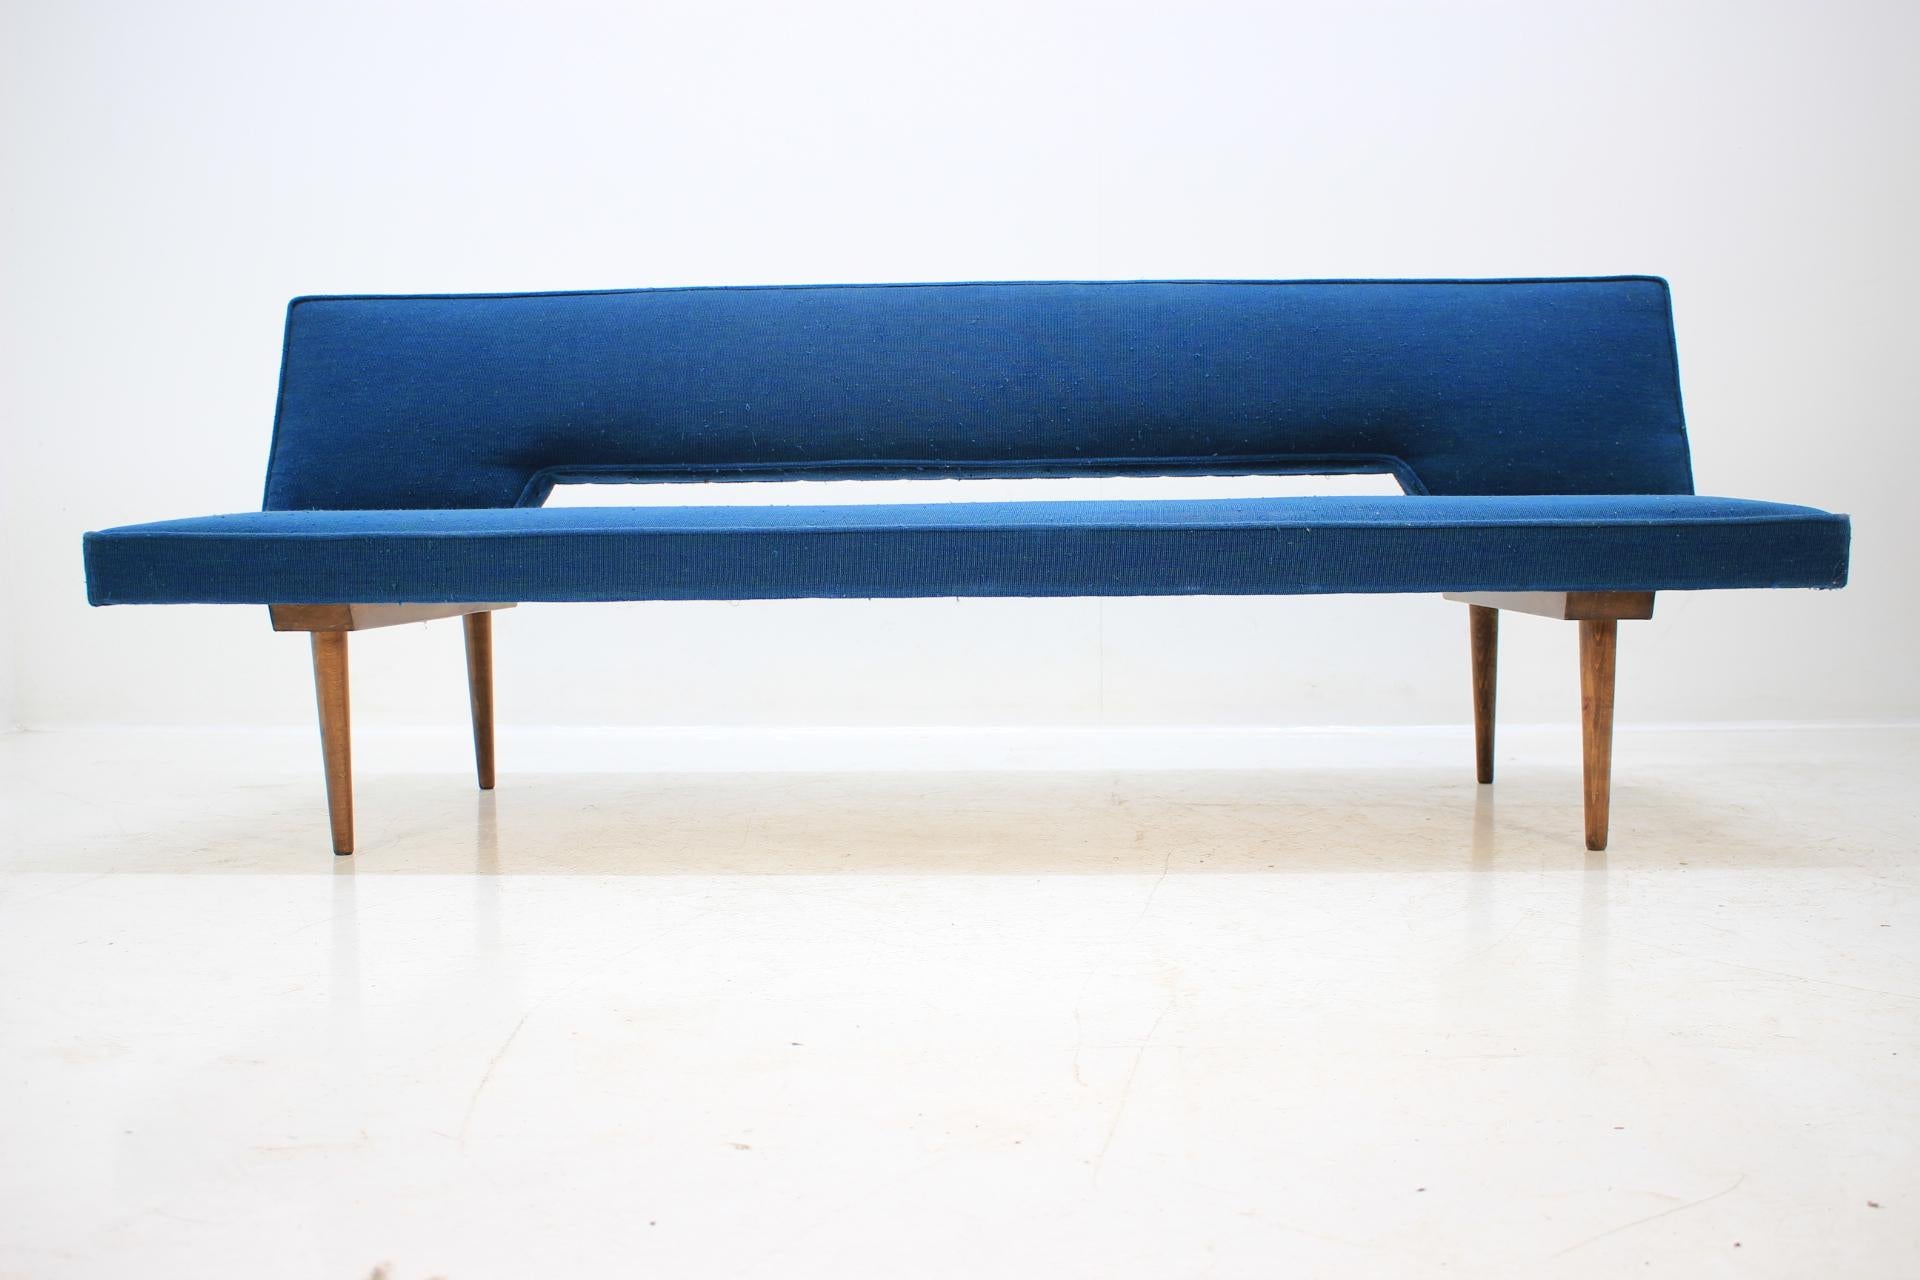 - 1960s, Czechoslovakia
- Design: Miroslav Navrátil
- original condition: suitable for new upholstery.